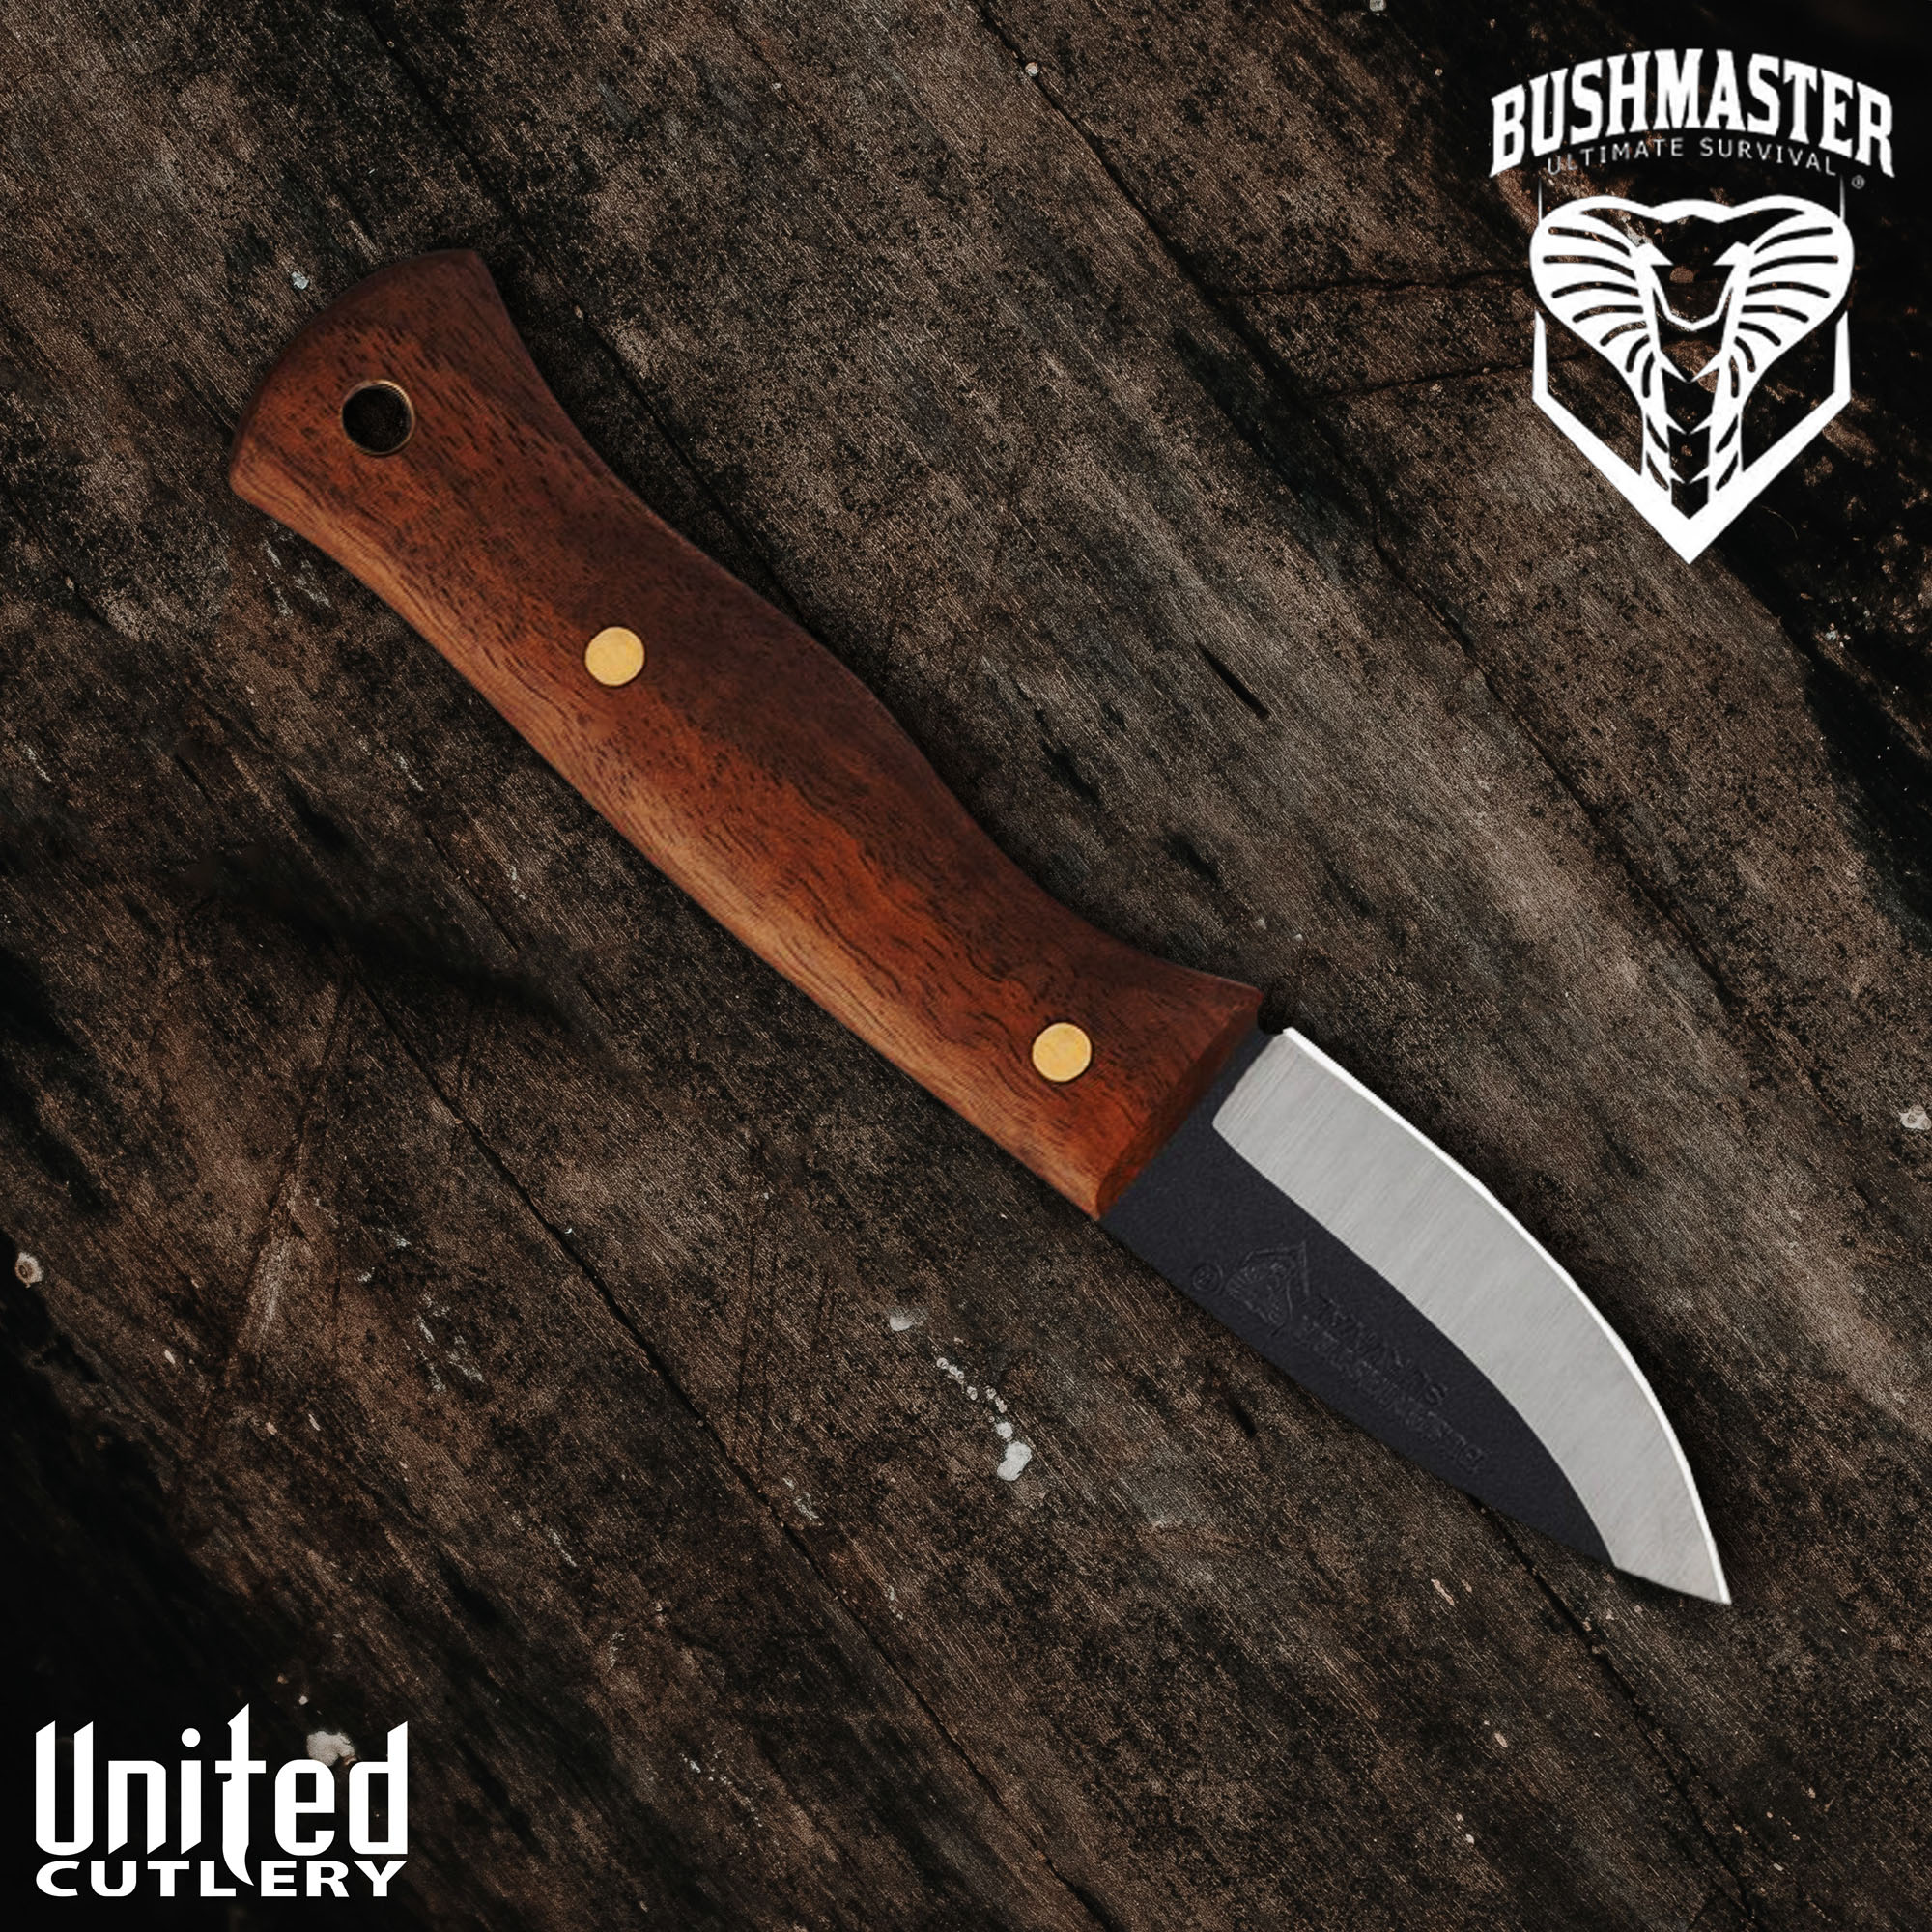 Bushmaster Bantam Bushcrafter Knife with Sheath